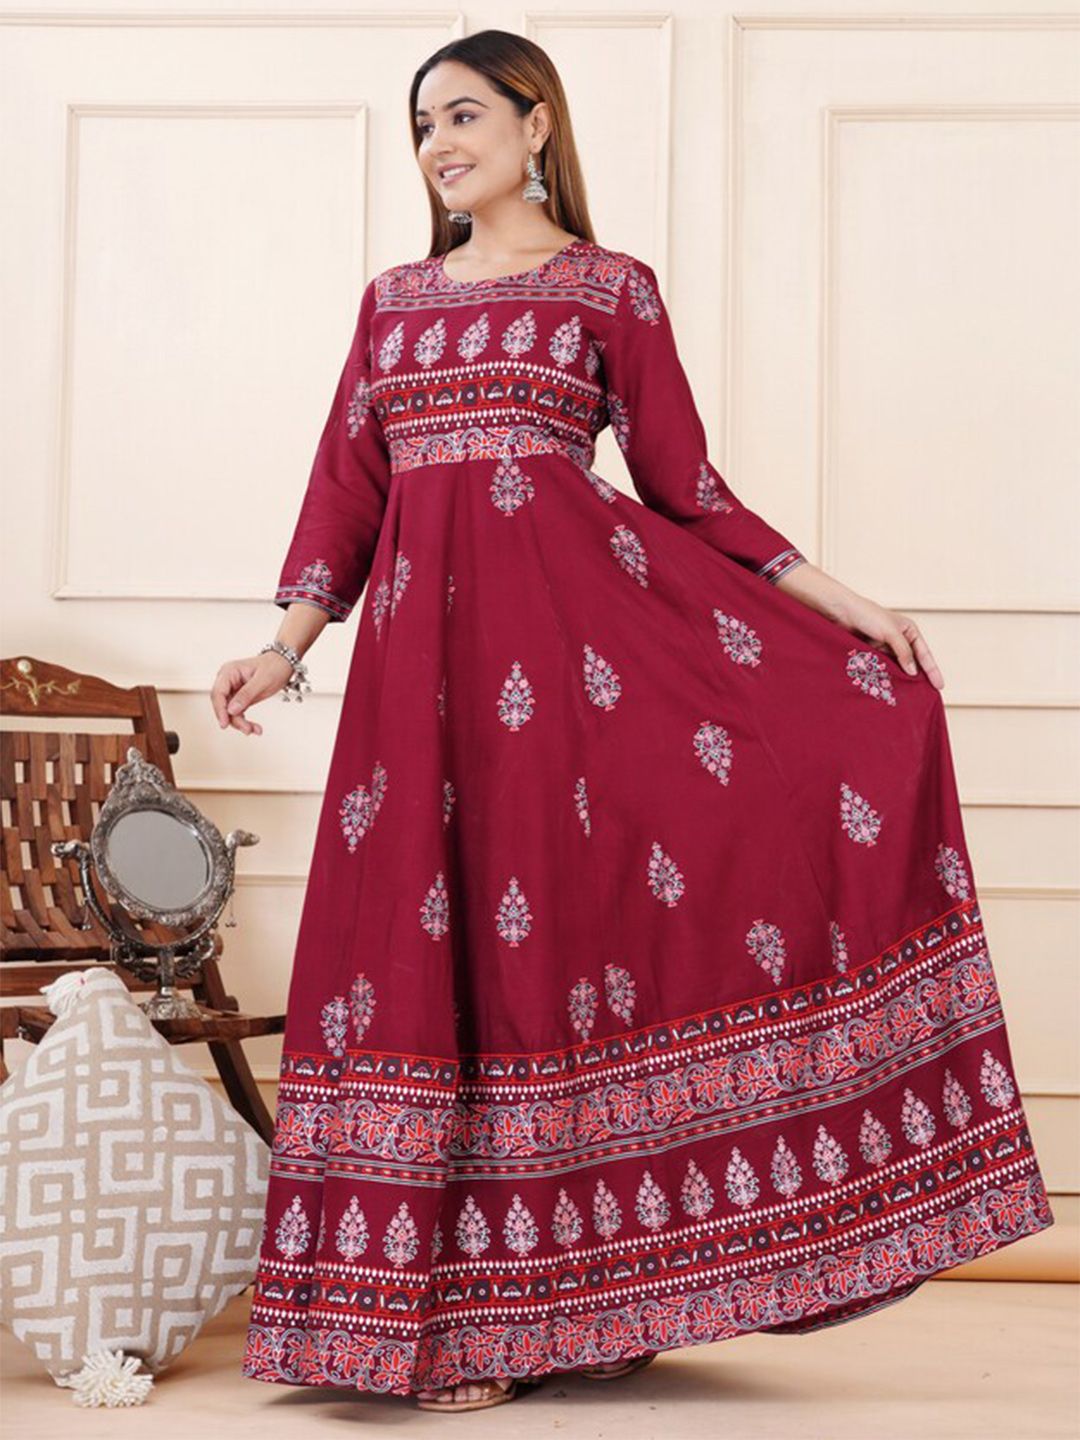 PURSHOTTAM WALA Ethnic Motifs Printed Round Neck Fit & Flare Maxi Ethnic Dress Price in India